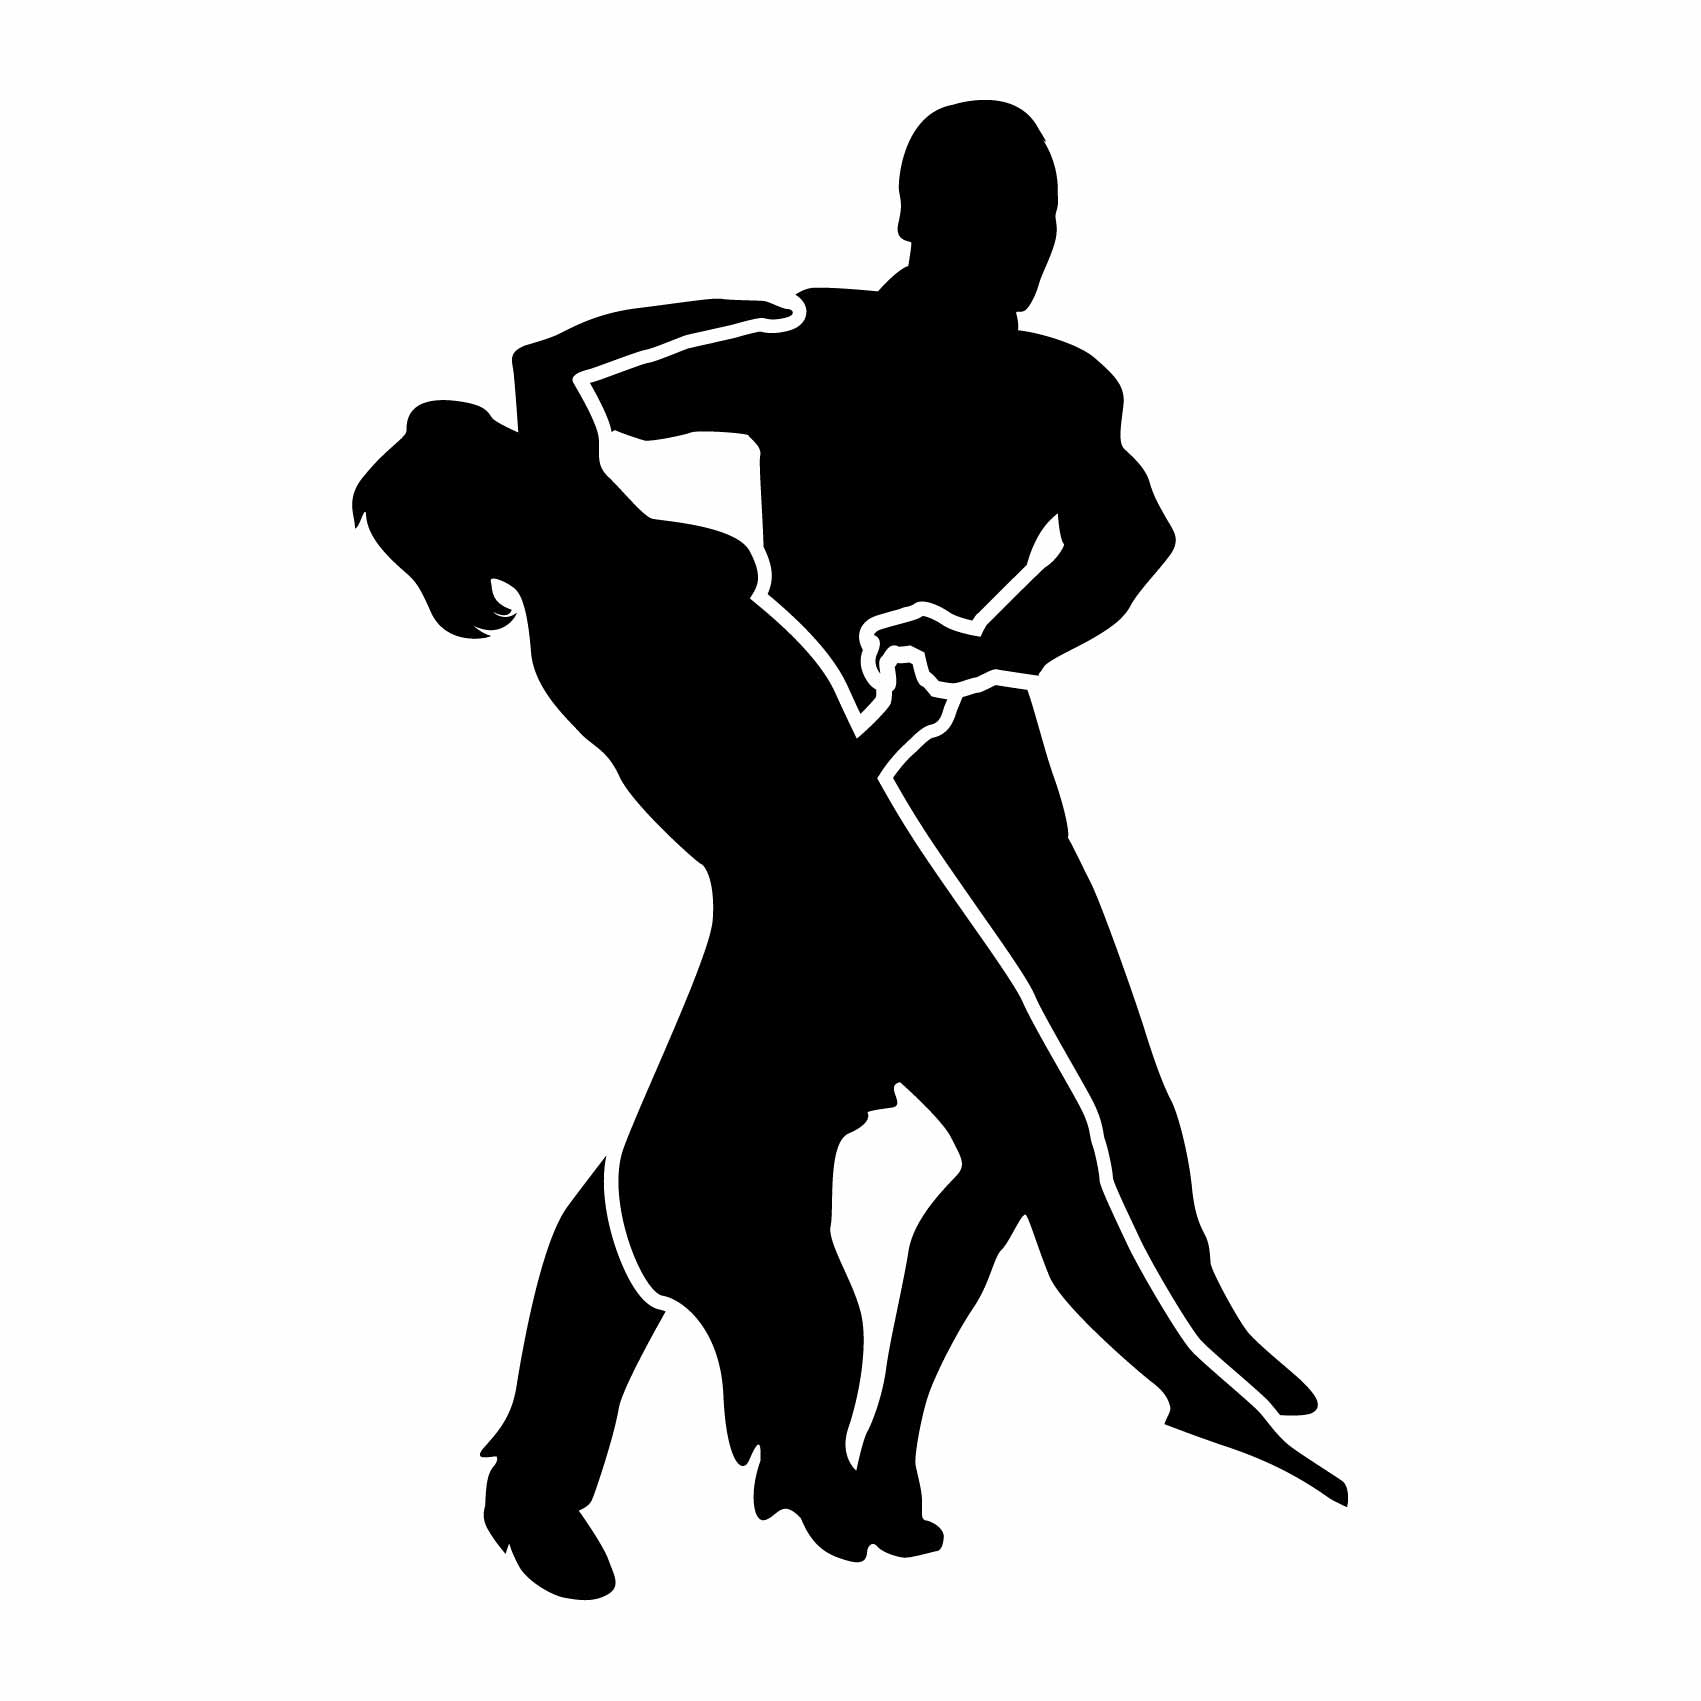 stickers-danse-couple-ref39sport-stickers-muraux-danse-autocollant-danseuse-deco-chambre-fille-salon-sticker-mural-sport-(2)